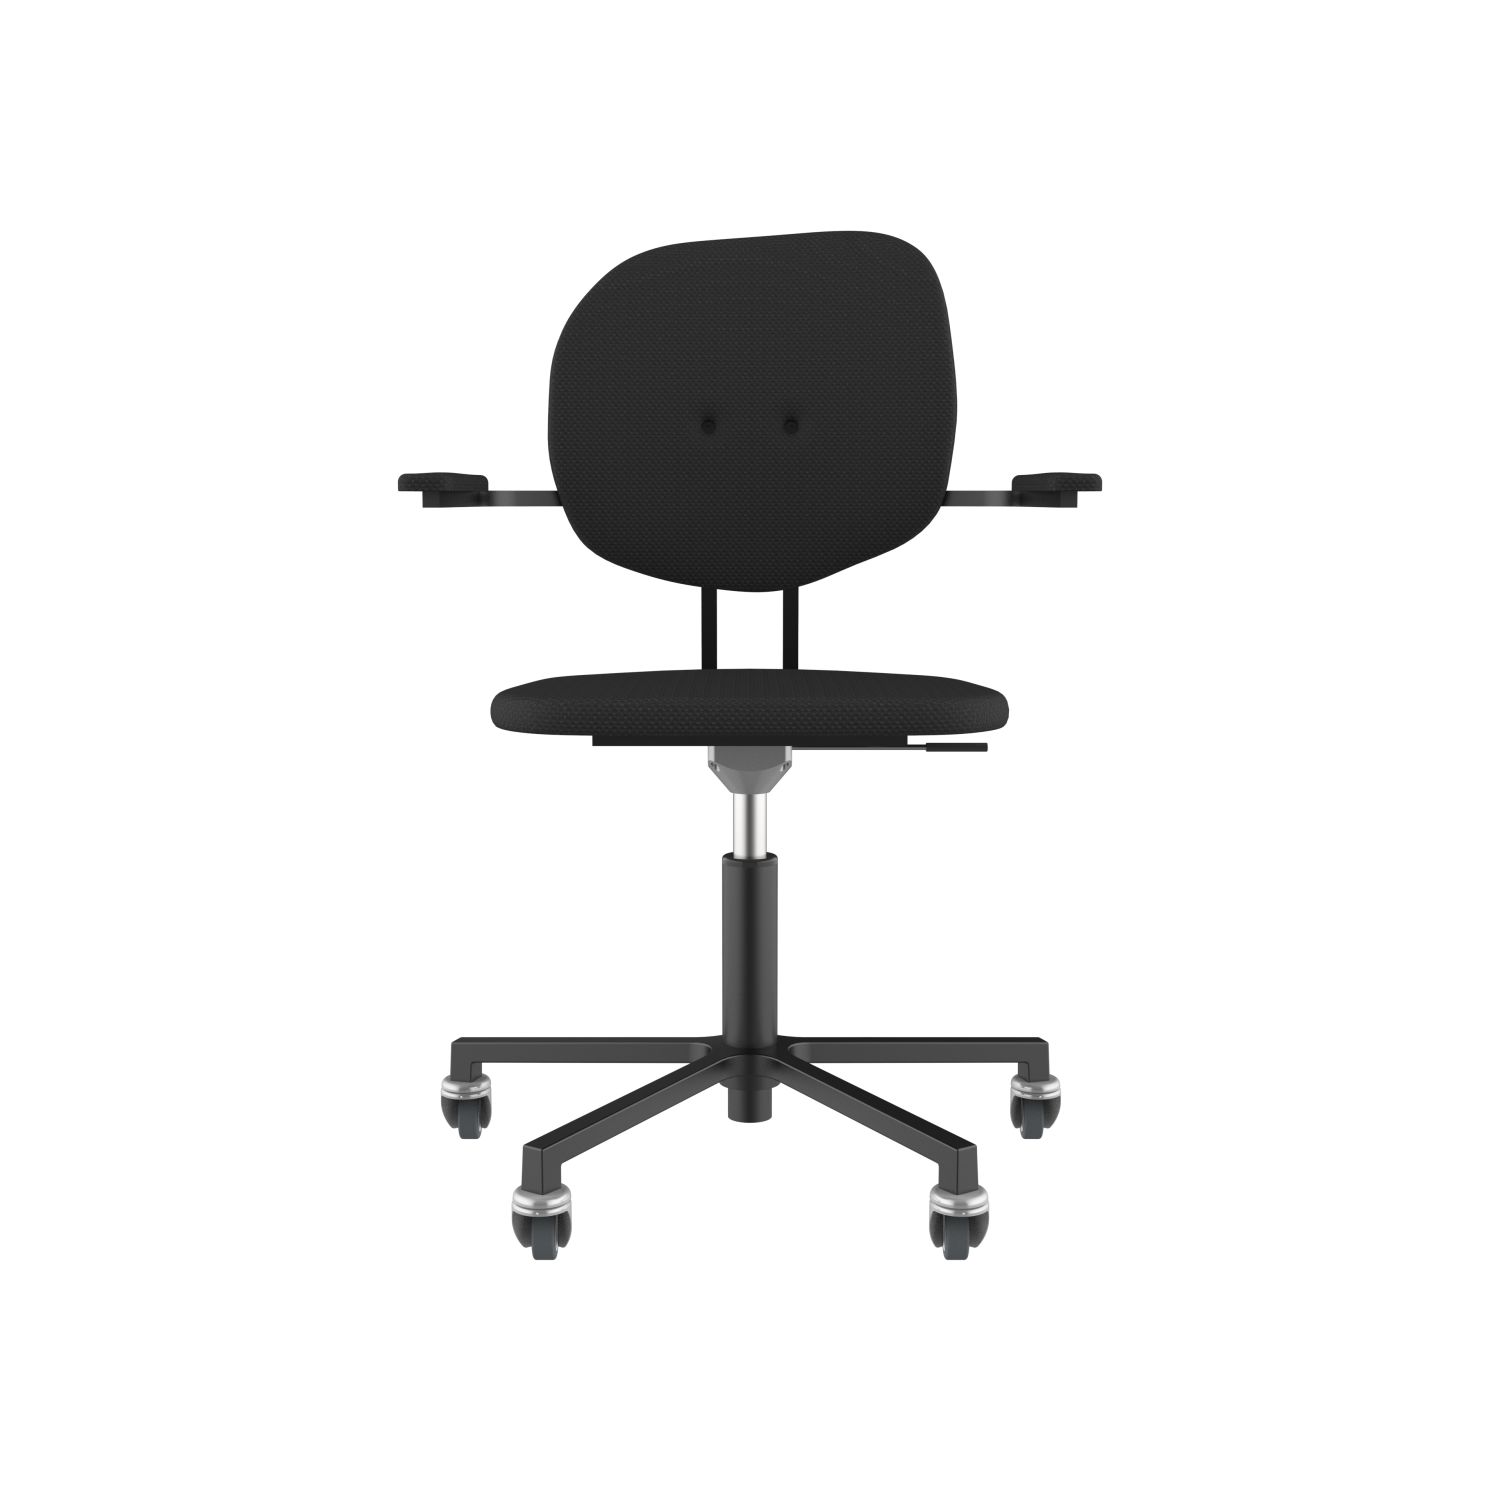 lensvelt maarten baas office chair with armrests backrest h havana black 090 black ral9005 soft wheels